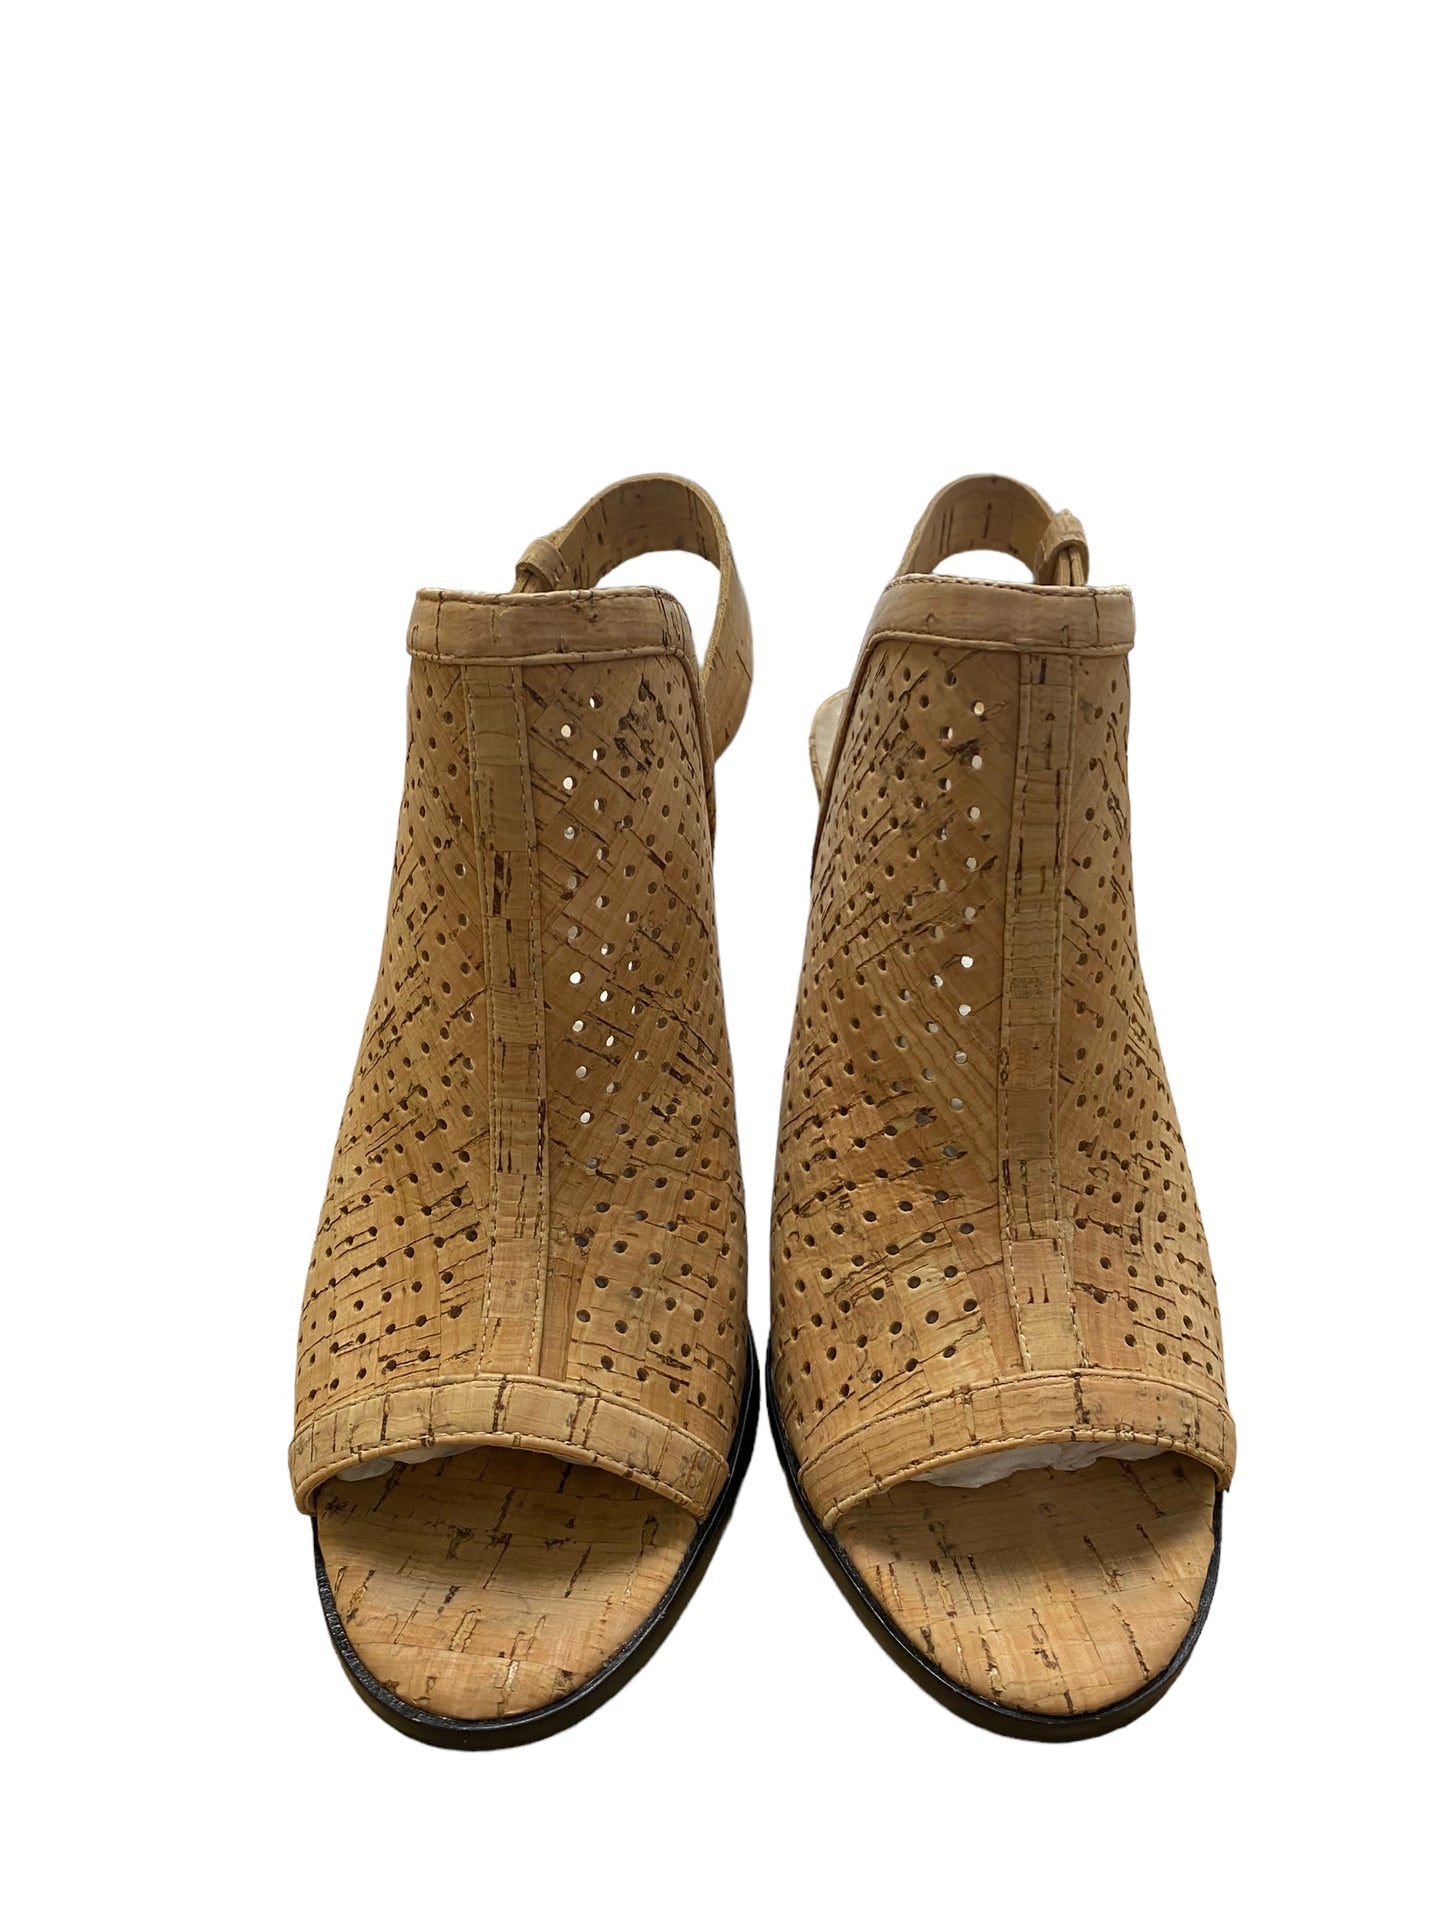 Shoes Heels Stiletto By Sesto Meucci  Size: 6